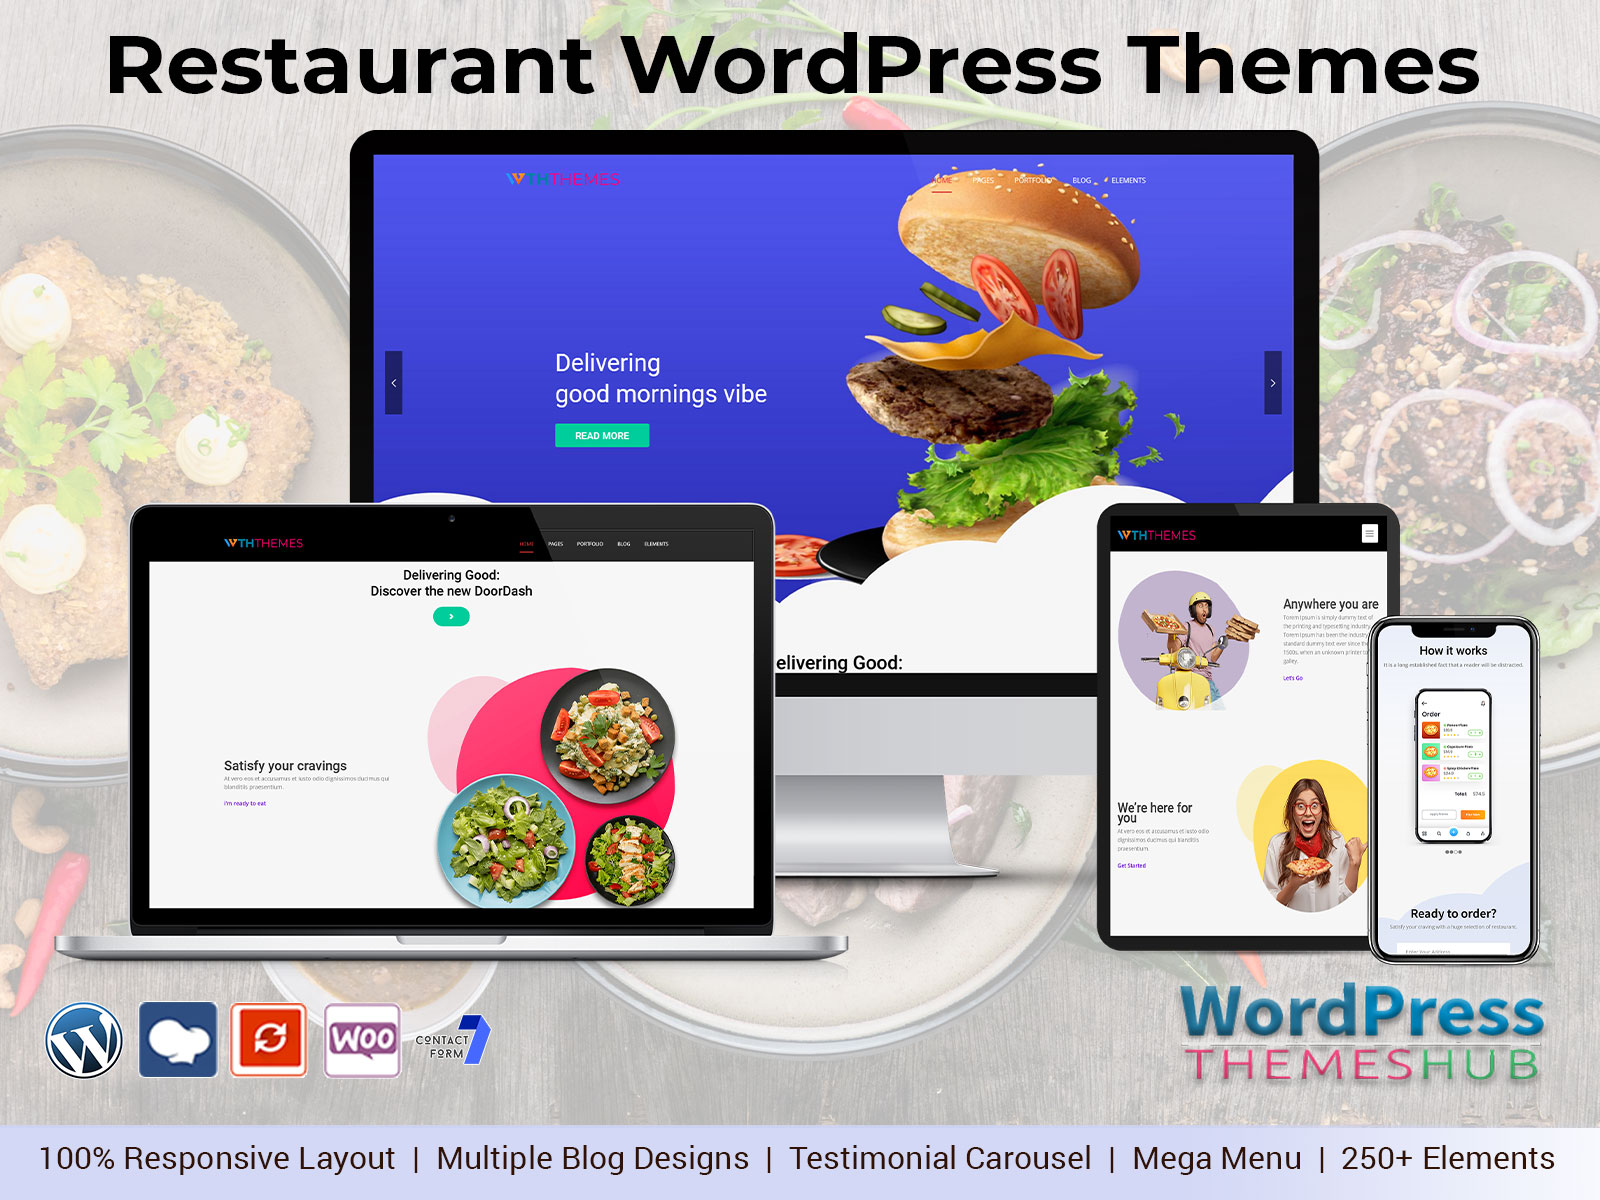 Restaurant WordPress Theme To Make Food Website